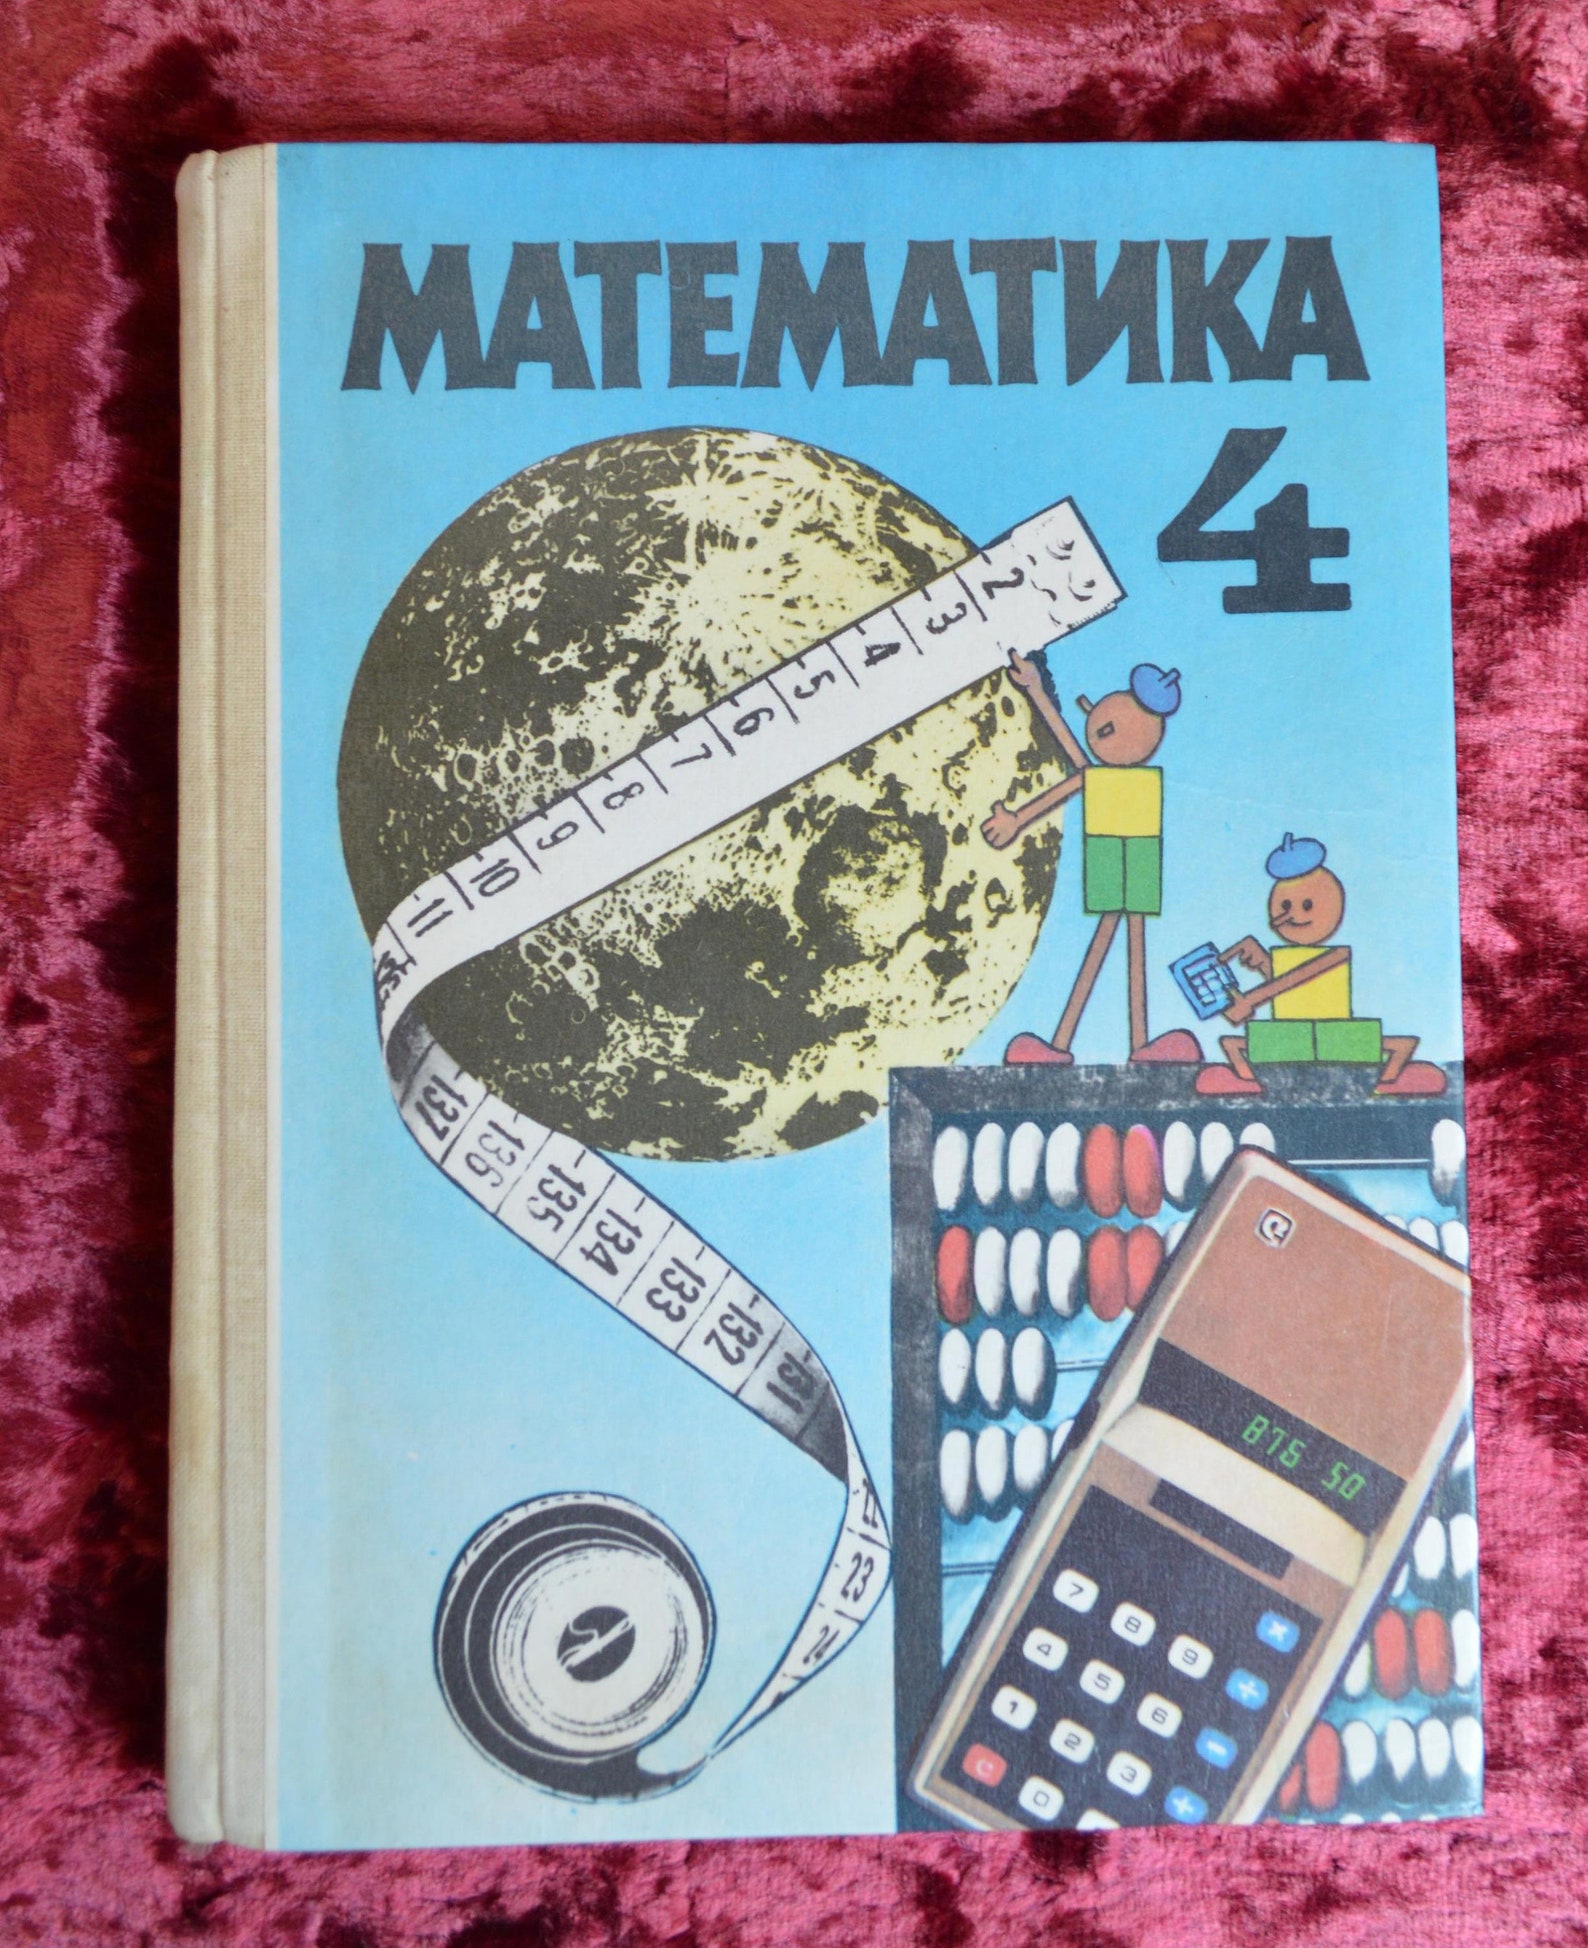 Учебник по математике с 48. Учебник математики СССР. Учебник по математике 1990 года. Учебник математике 4 класс 1990 года. Математика 4 класс СССР учебник.